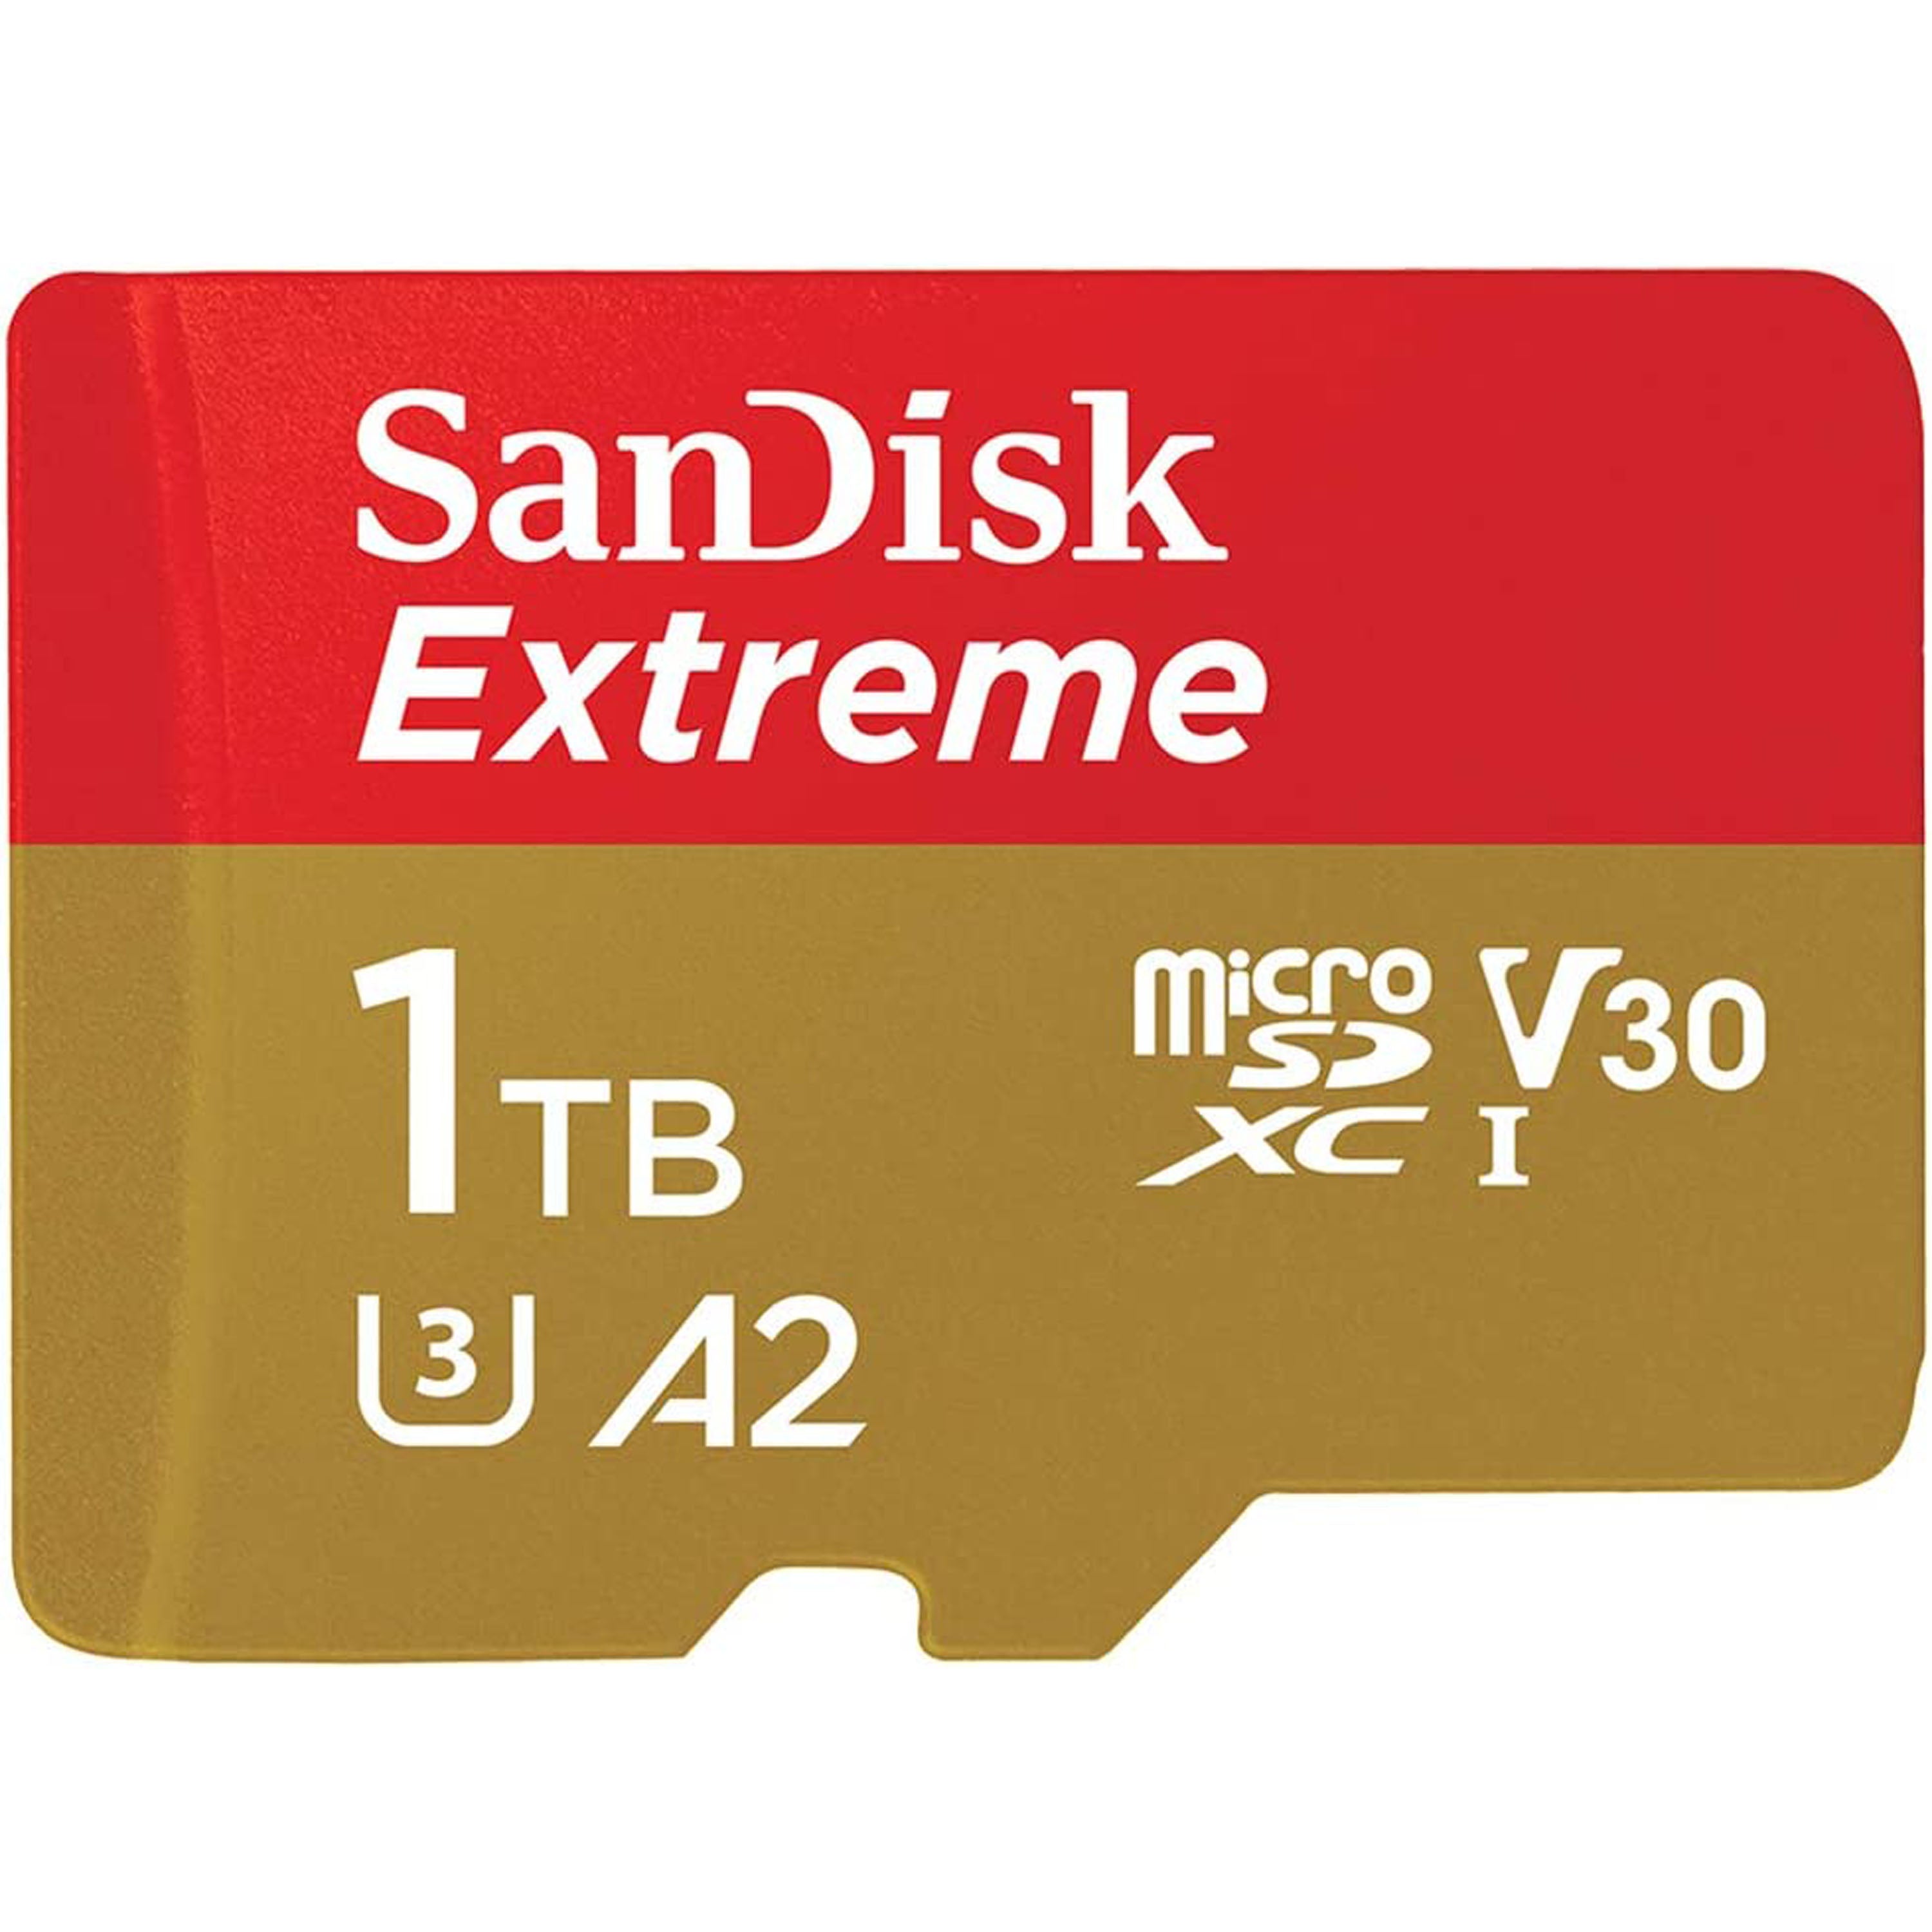 Sandisk Extreme MicroSDXC 1TB 160MB/s UHS-I